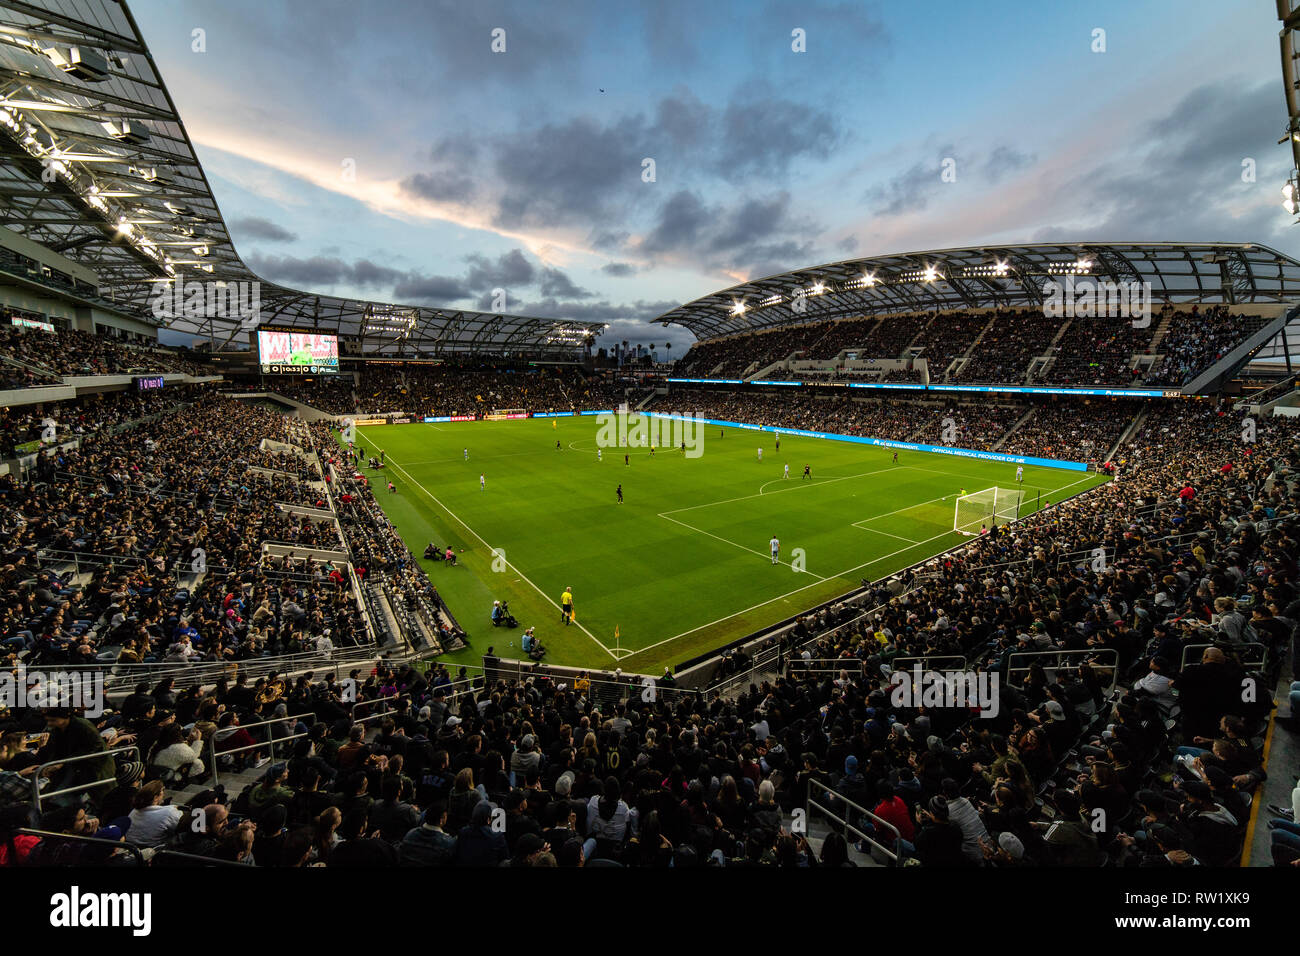 Los Angeles, USA. 3rd March, 2019. Stadium sights during LAFC's 2019 MLS season opener. Credit: Ben Nichols/Alamy Live News Stock Photo